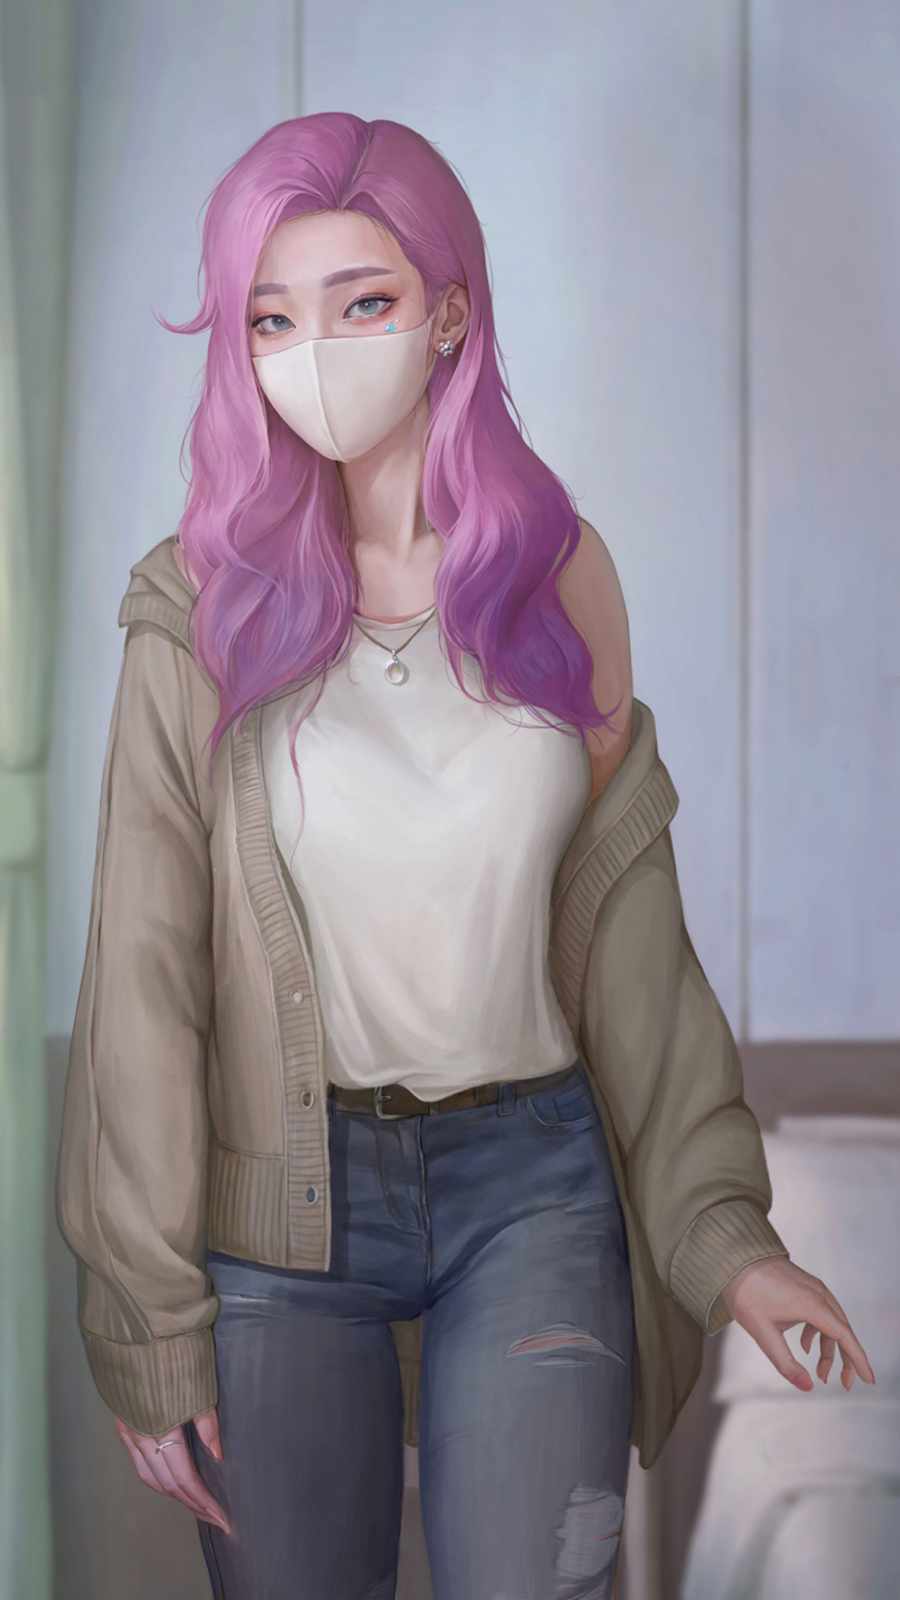 Pink Hair Anime Girl iPhone Wallpaper